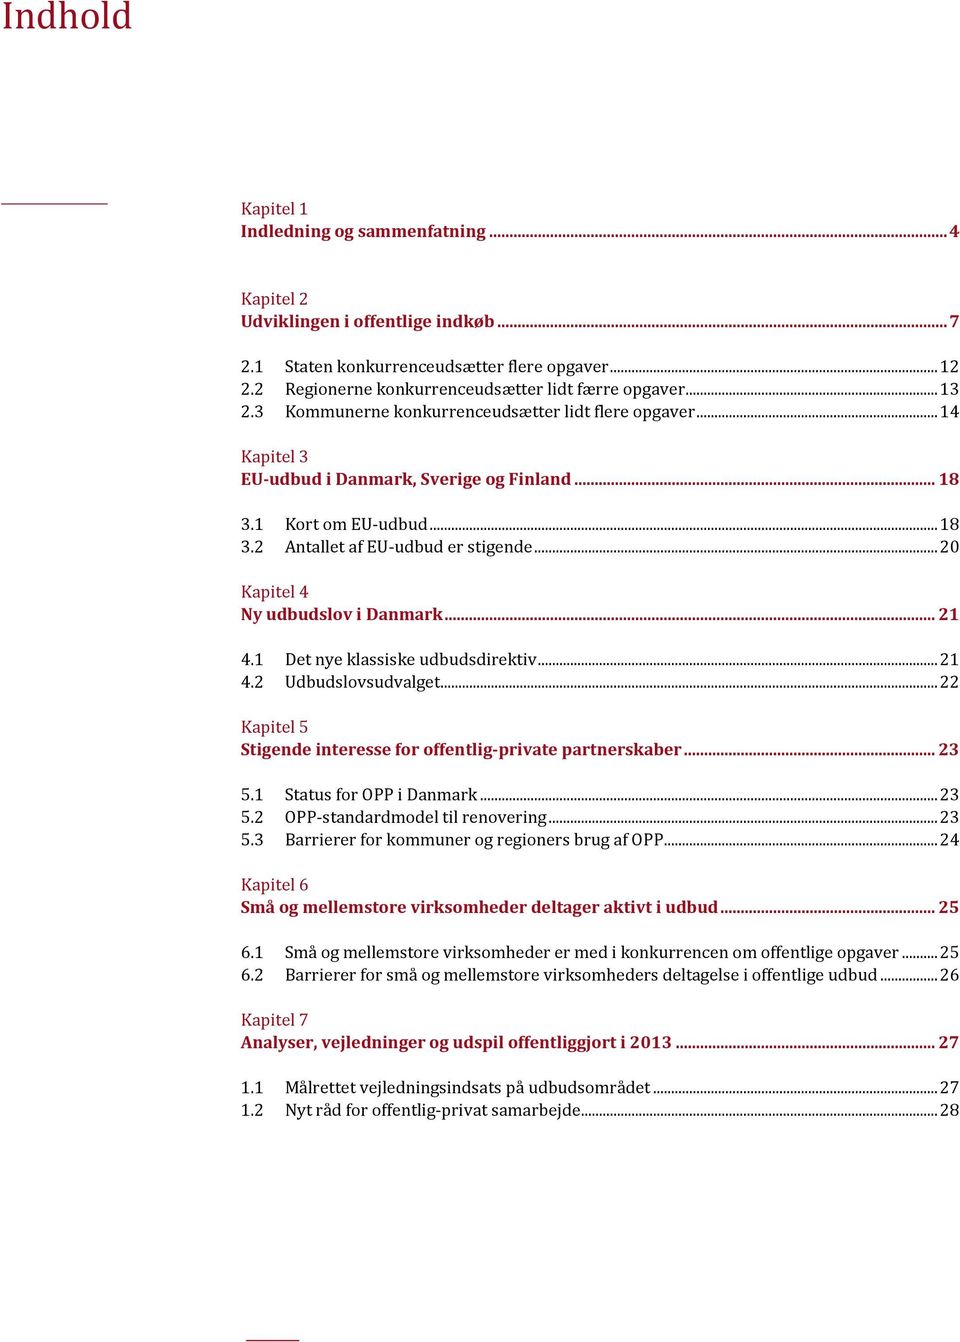 1 Kort om EU-udbud... 18 3.2 Antallet af EU-udbud er stigende... 20 Kapitel 4 Ny udbudslov i Danmark... 21 4.1 Det nye klassiske udbudsdirektiv... 21 4.2 Udbudslovsudvalget.